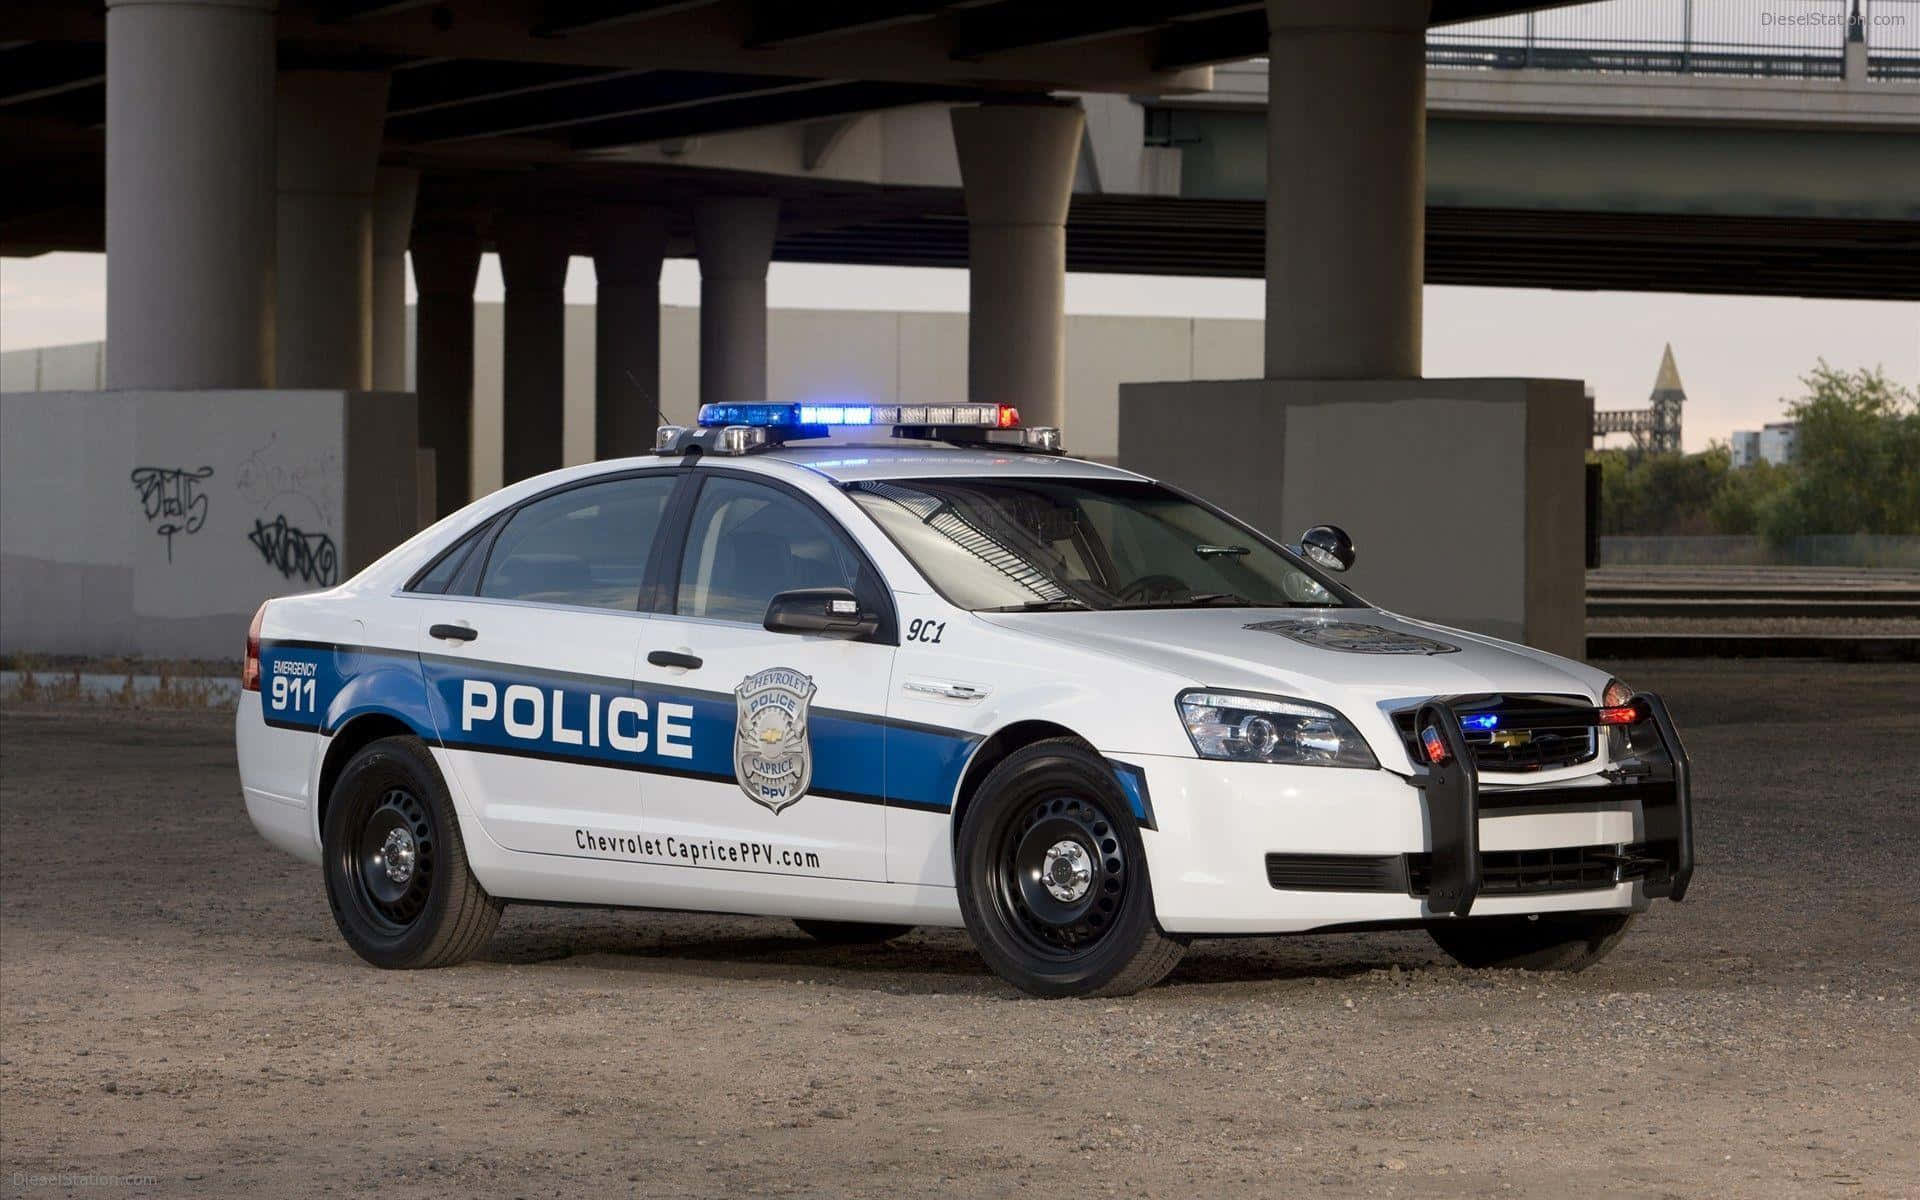 Modern Black and White Police Car on Patrol